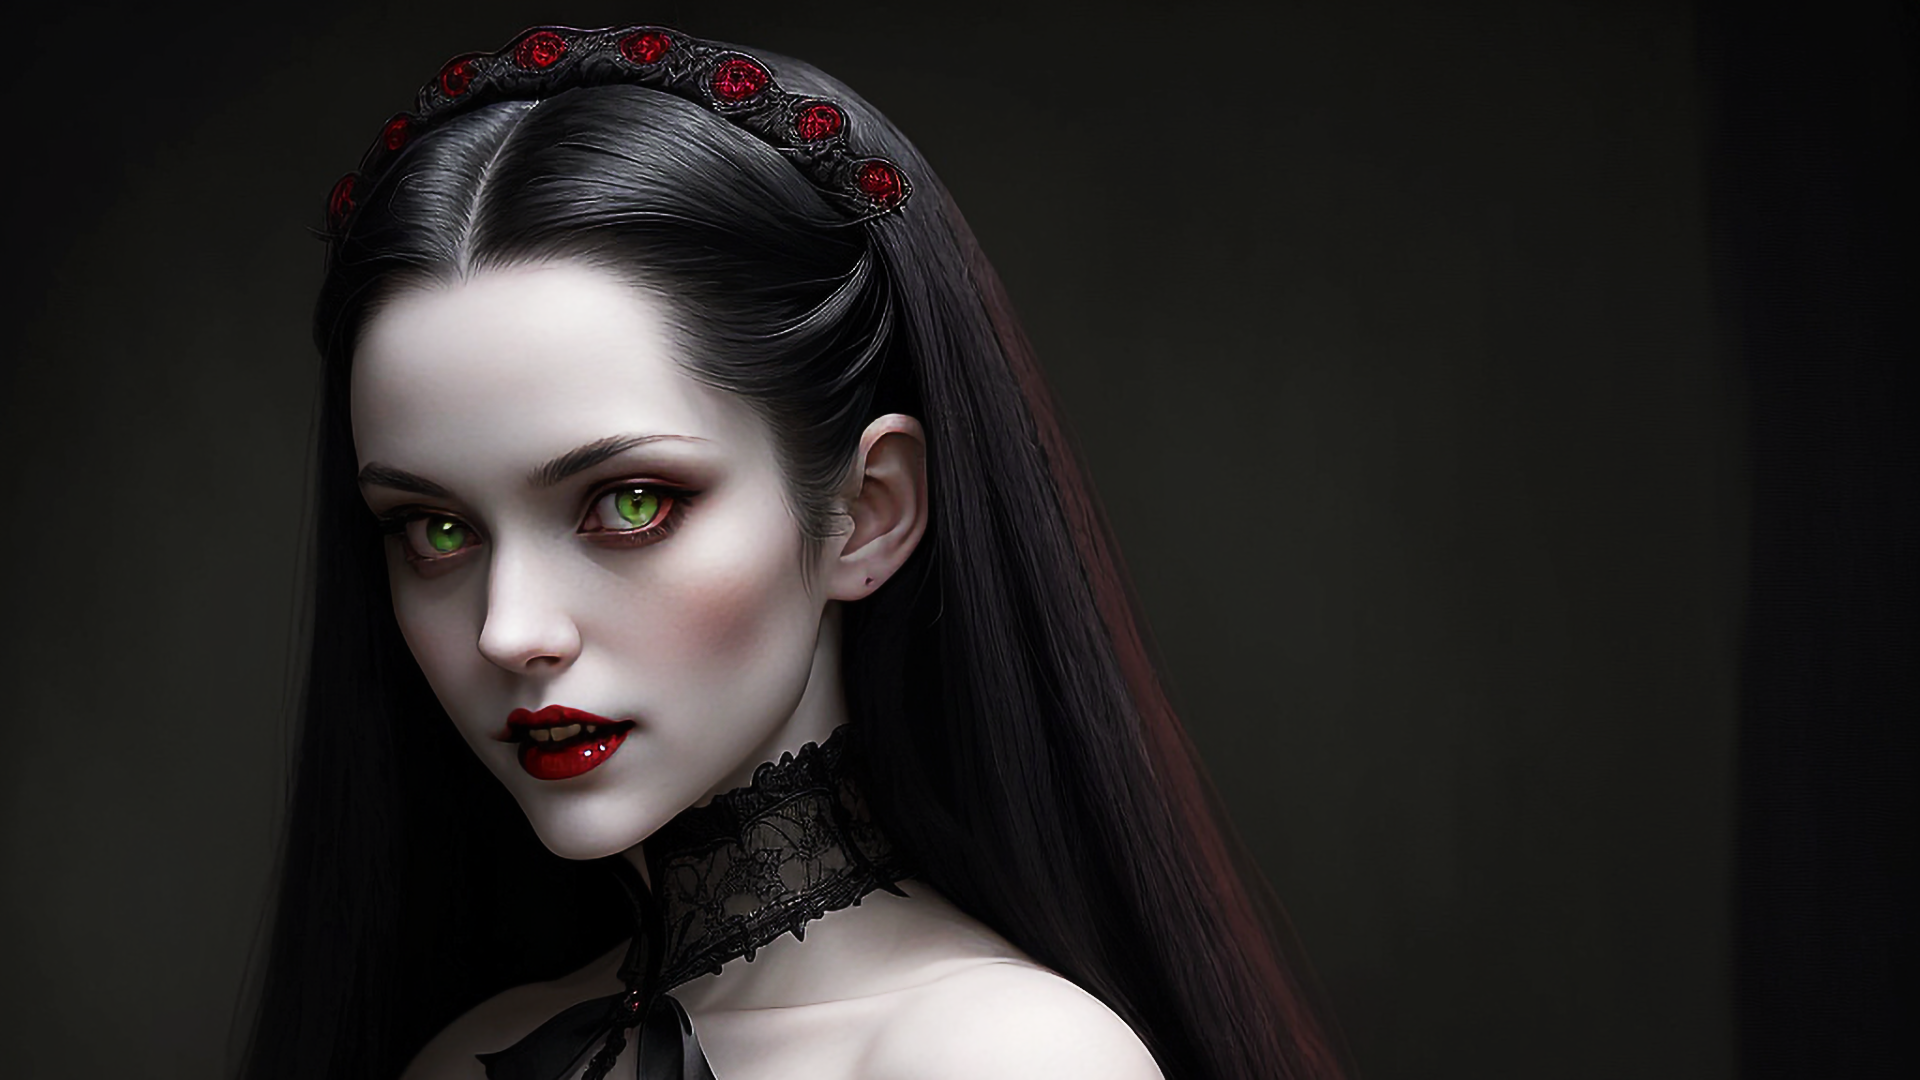 General 1920x1080 AI art women vampires black hair red lipstick long hair looking at viewer digital art simple background minimalism